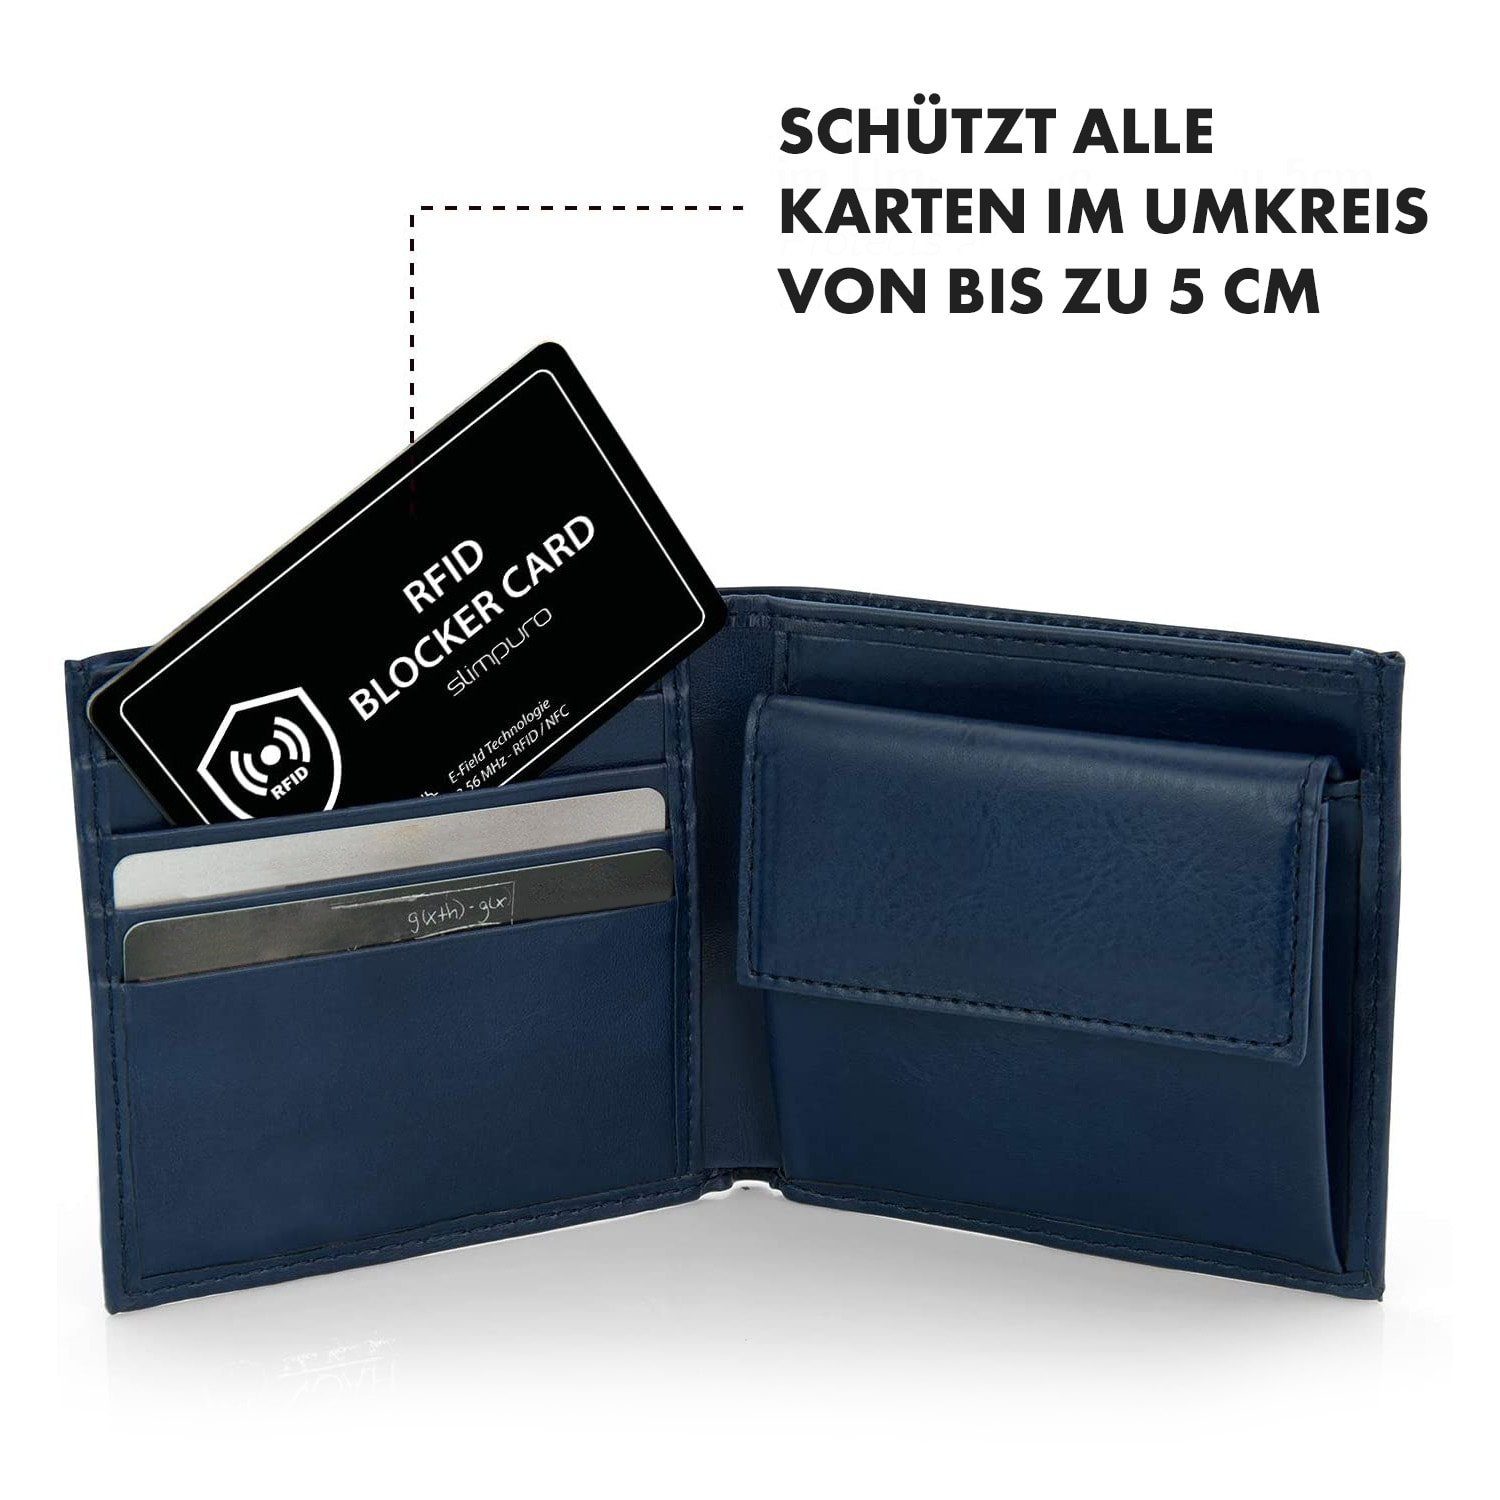 Slimpuro Geldbörse Carte Blocker RFID